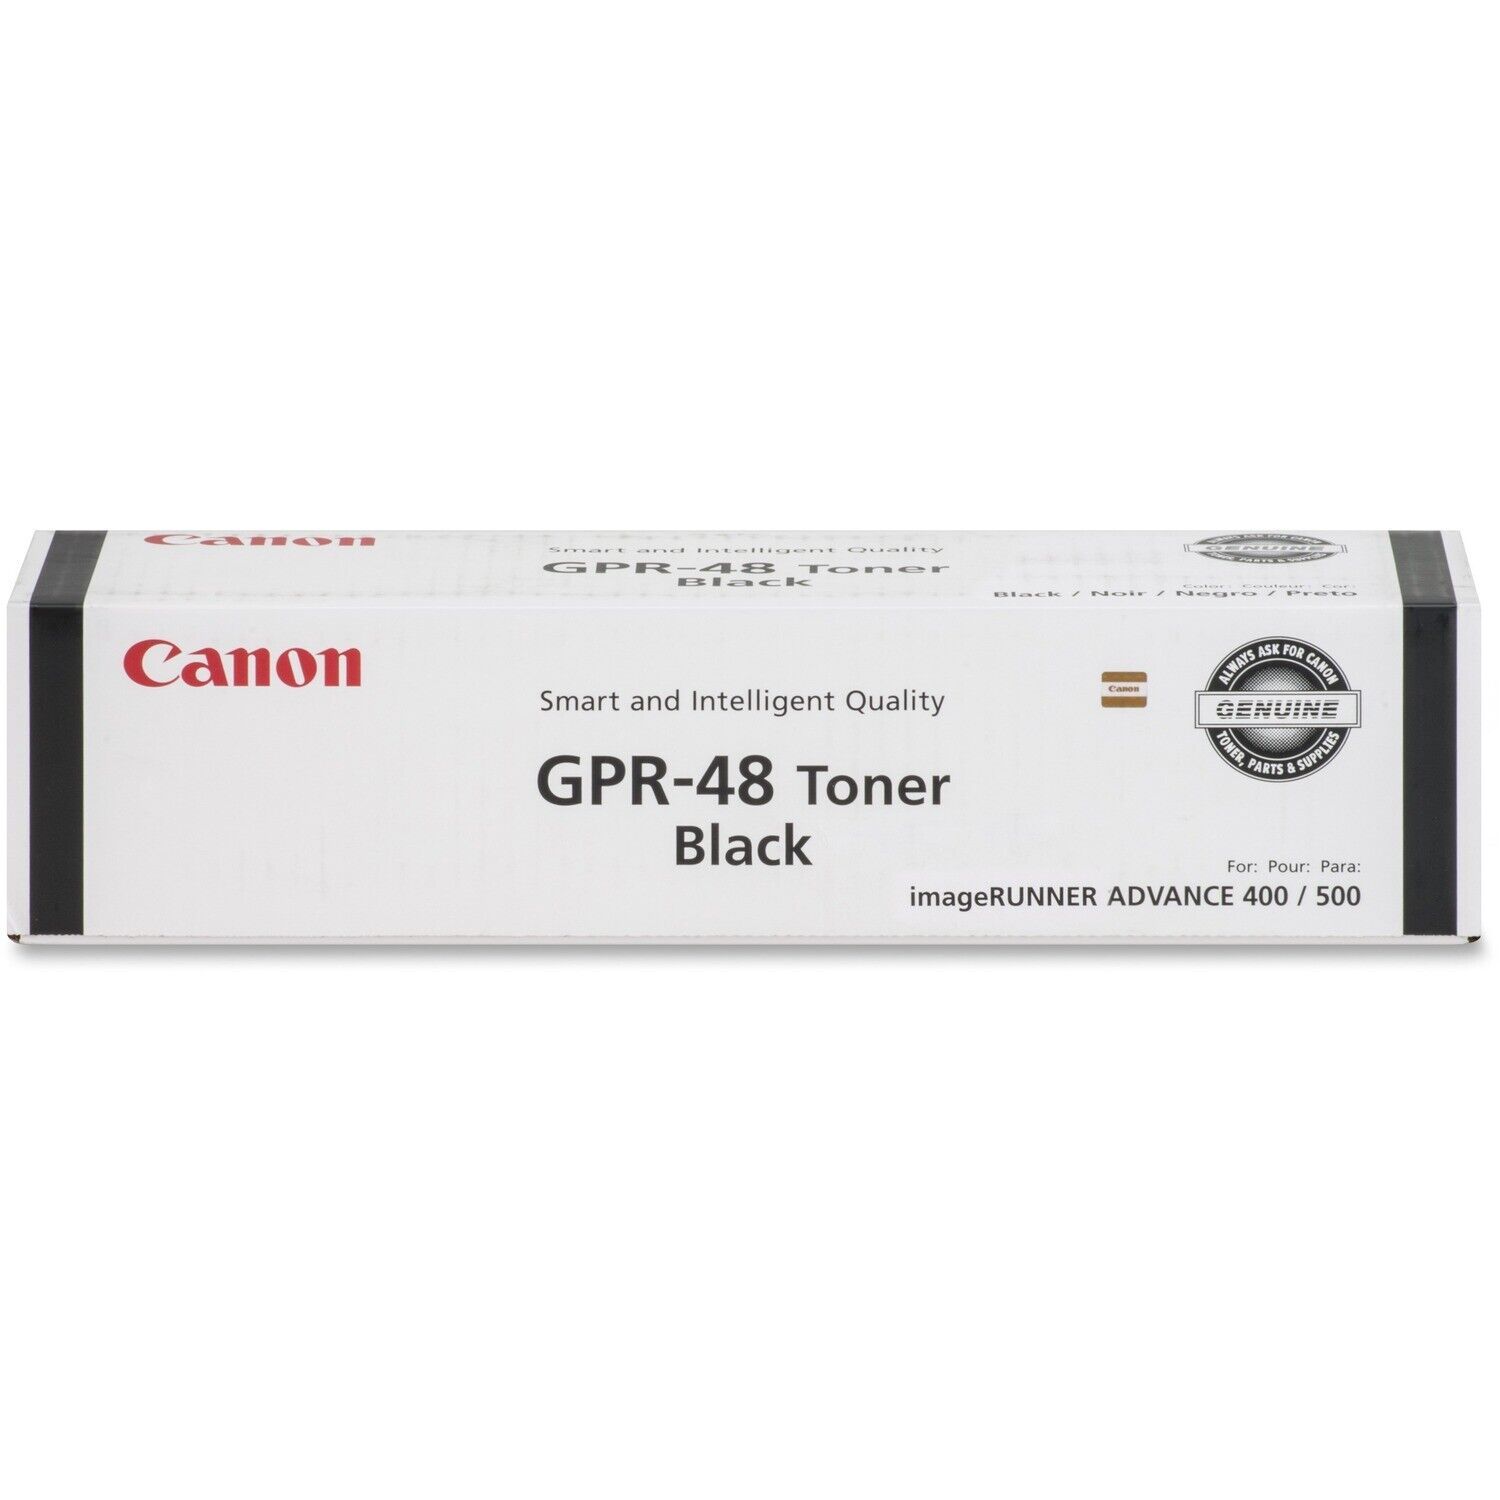 Canon Toner Cartridge f/400/500 15 200 Page Yield BK GPR48